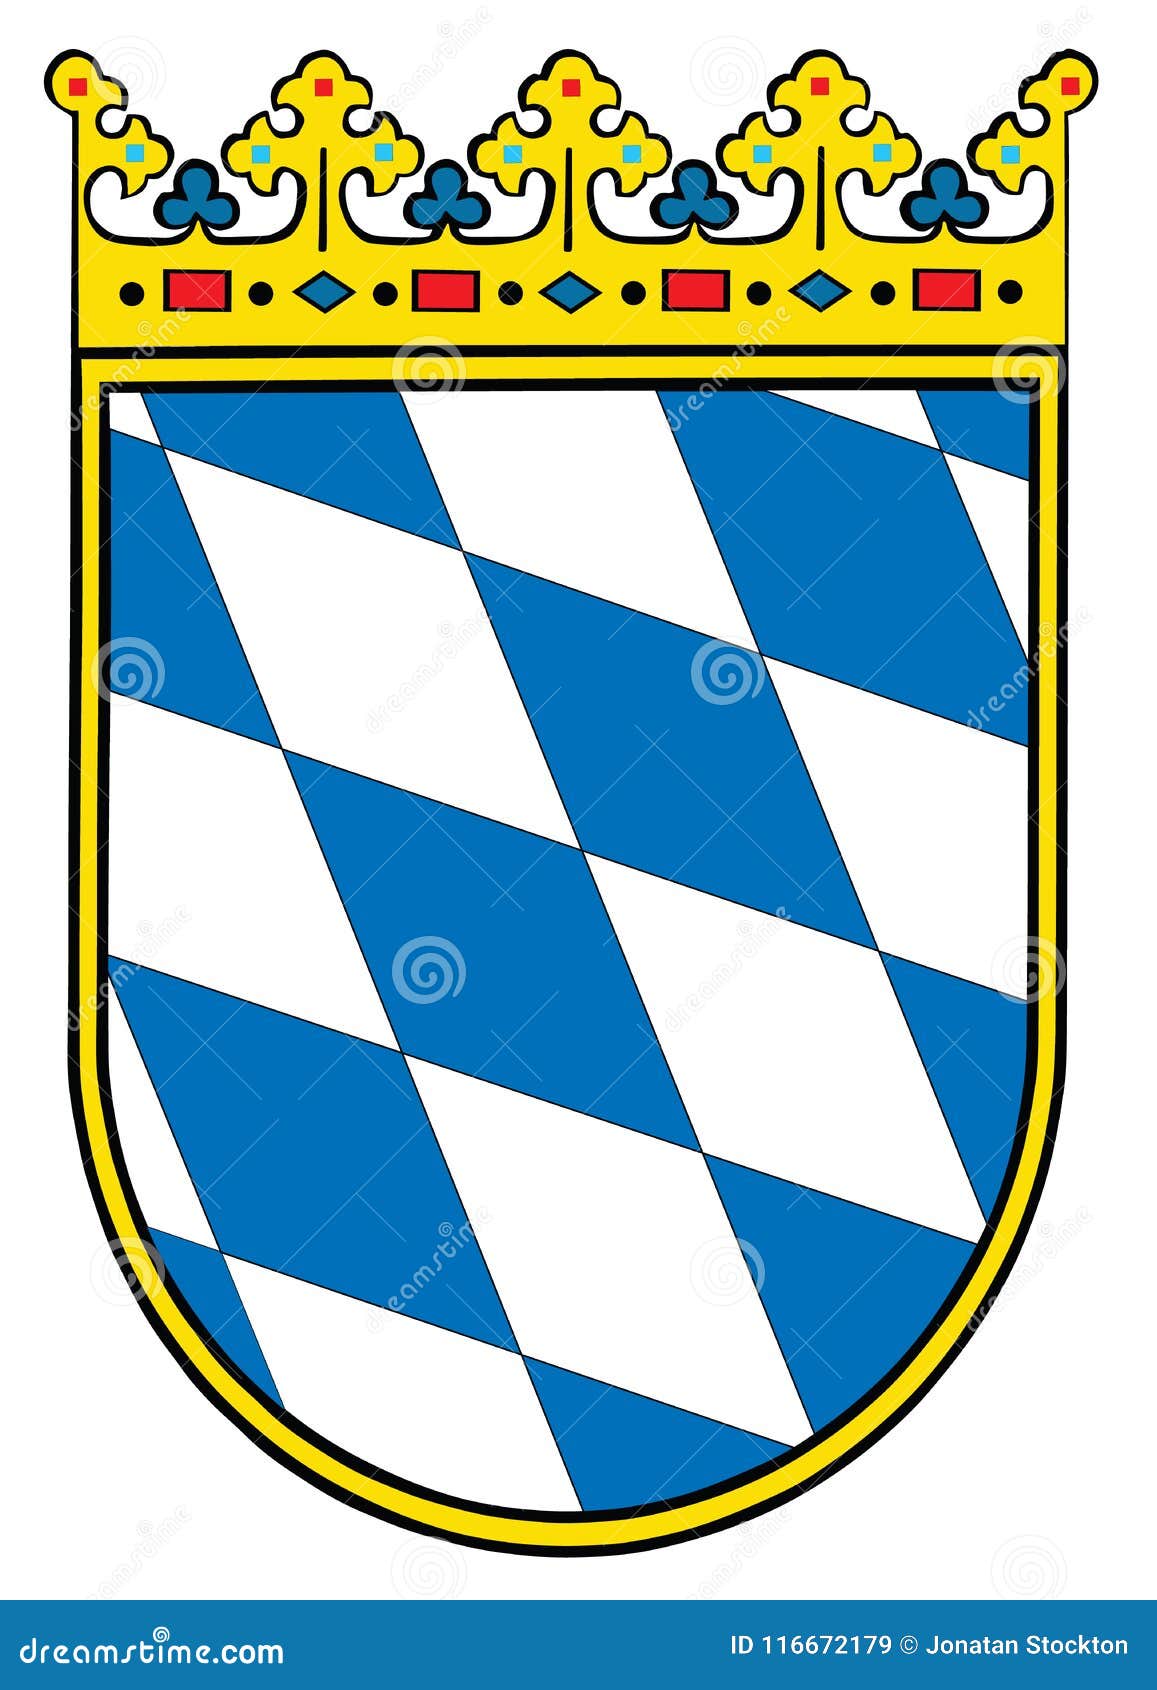 small coat of arms of bavaria, germany. bavaria emblem, shield, national .